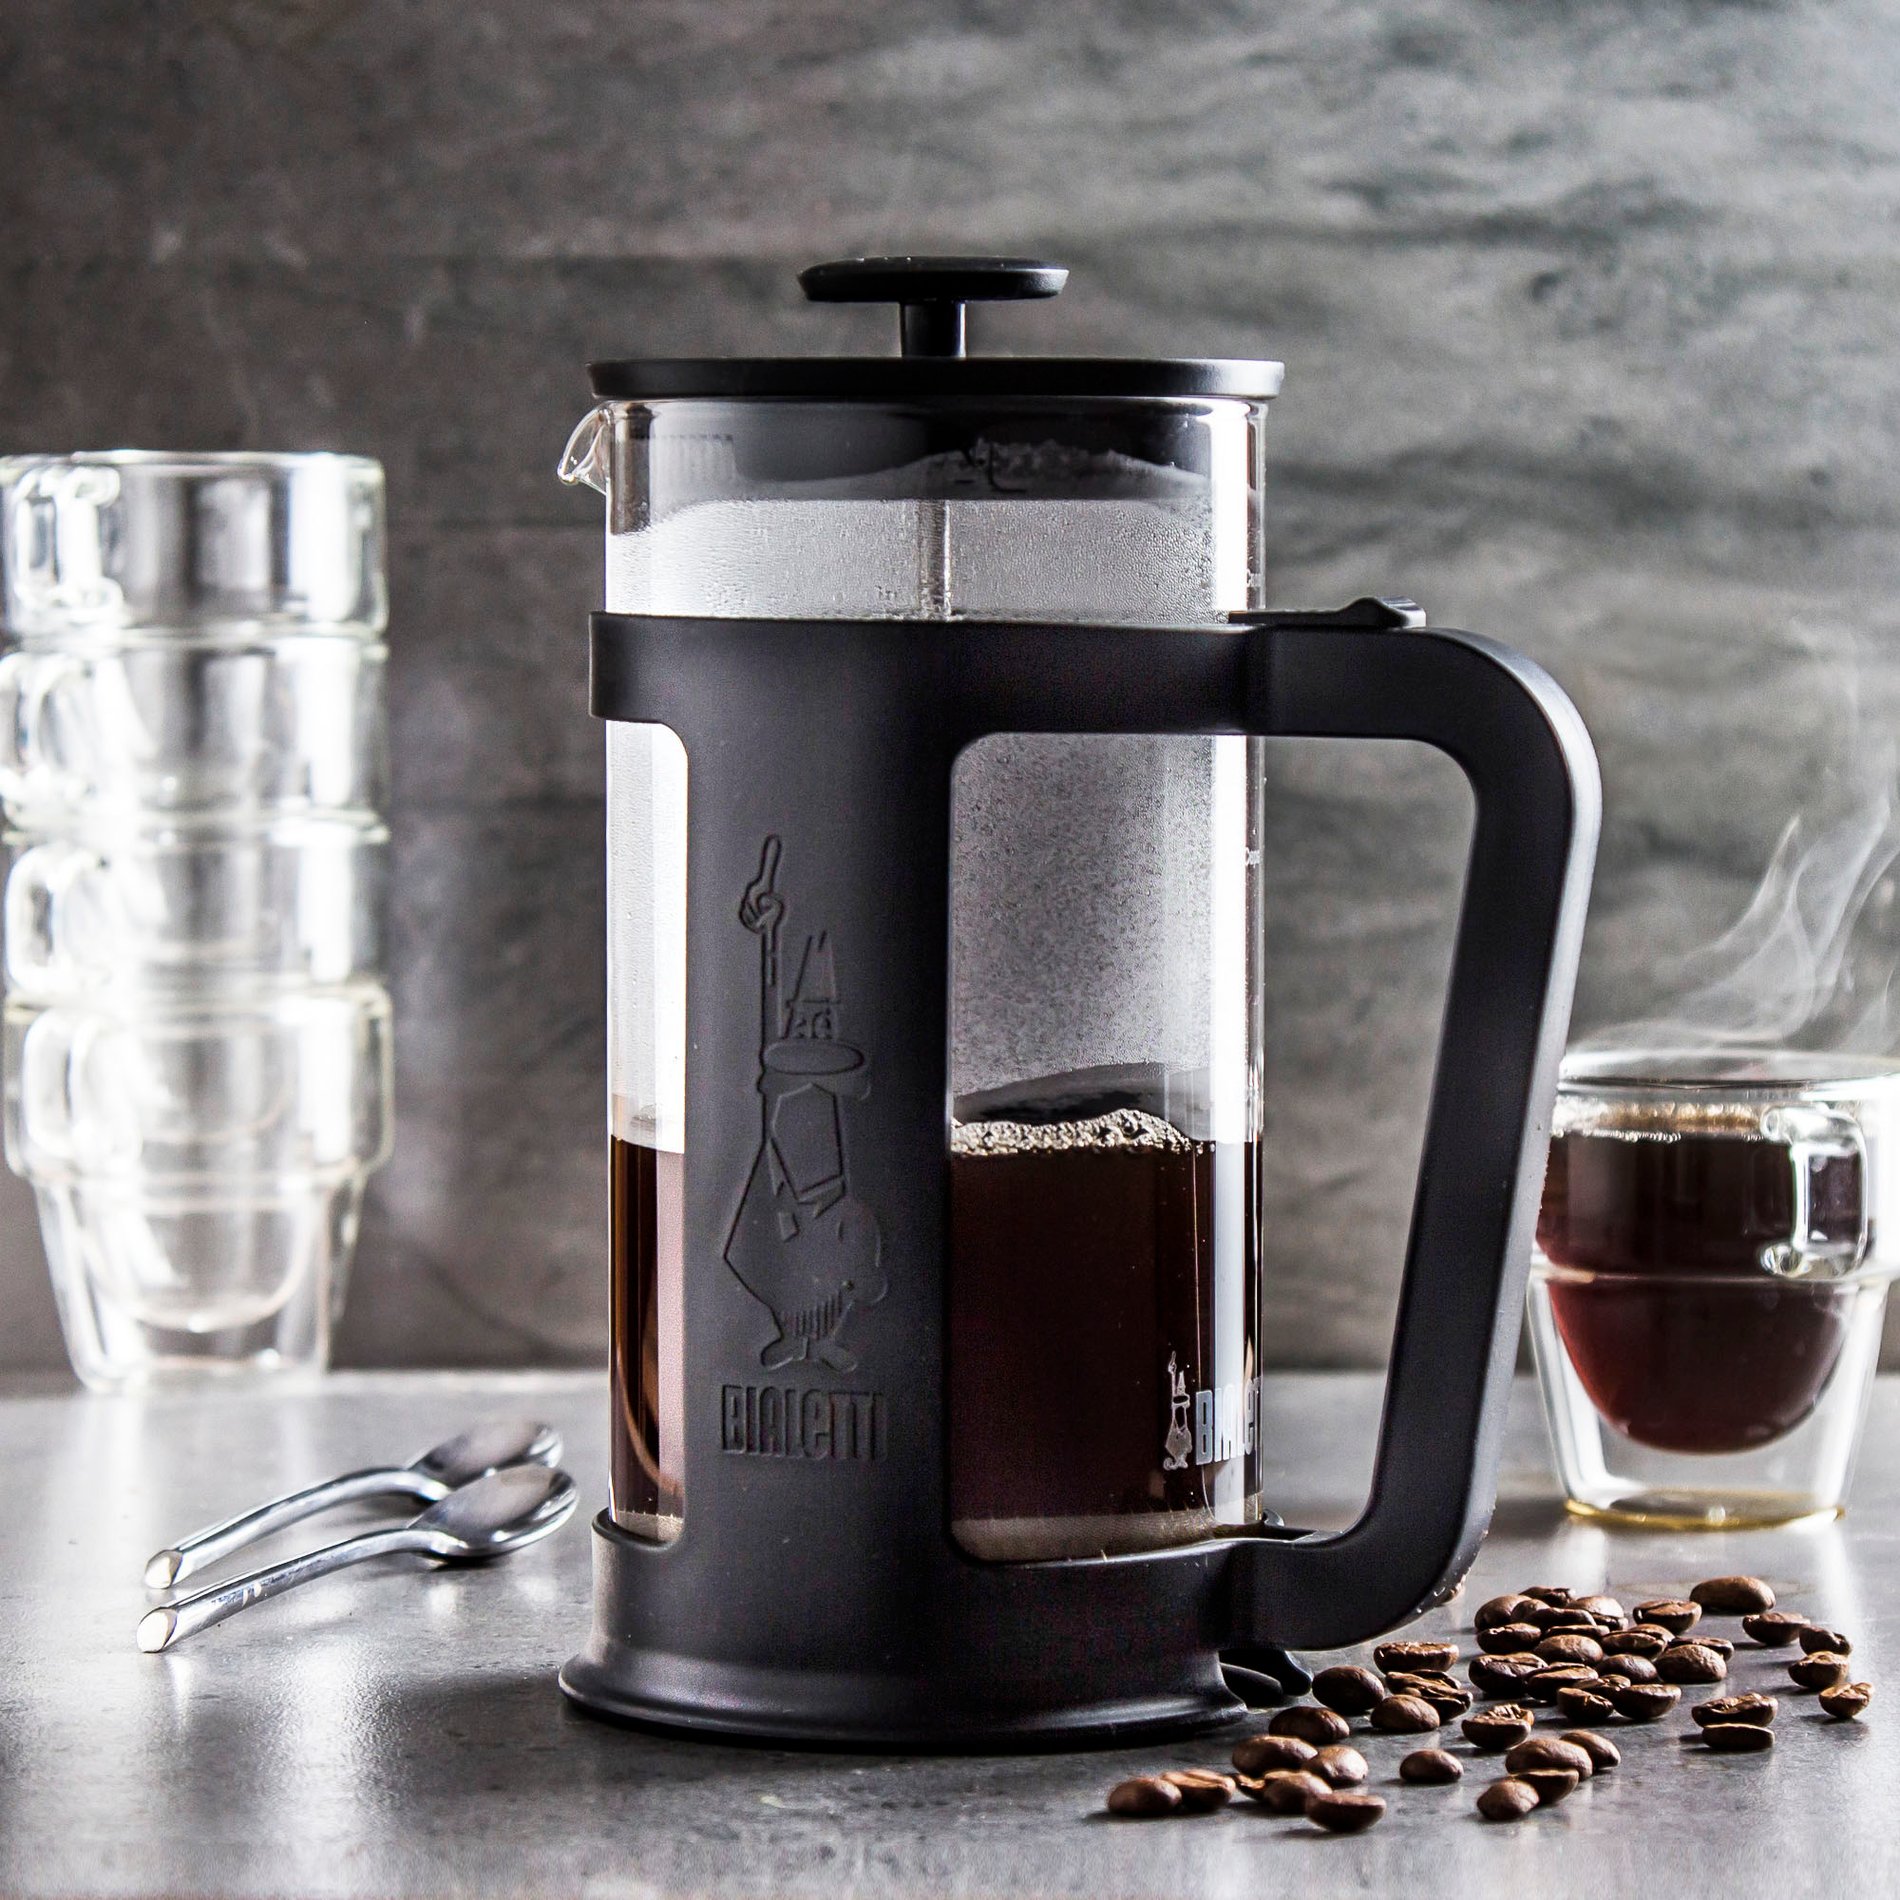 BIALETTI Coffee Press Smart 1 l černá - french press - skleněná konvice na čaj a kávu